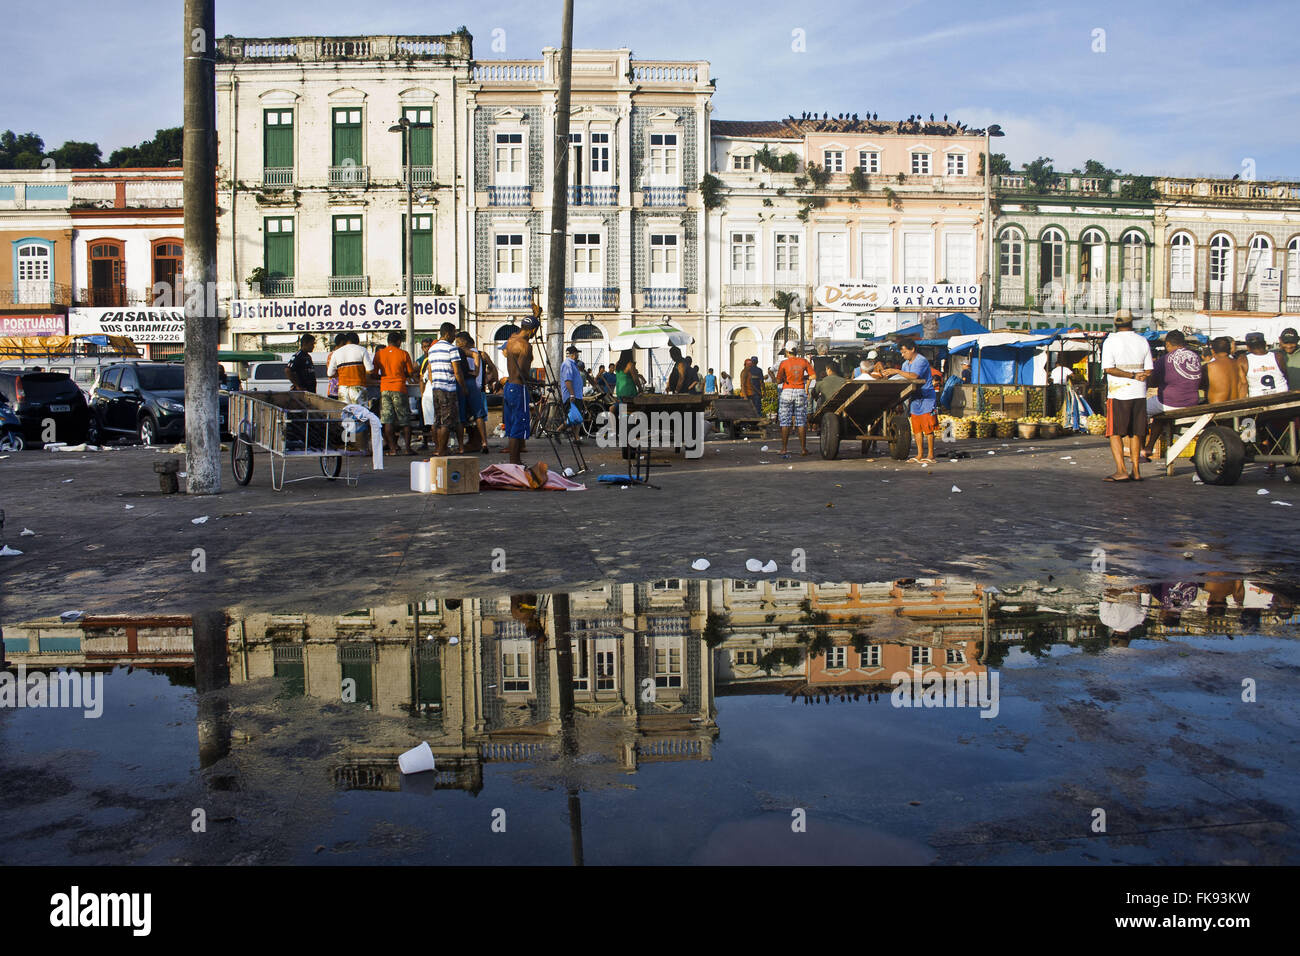 Ver-o-Peso - feria libre más grande de América Latina - Old Town Foto de stock